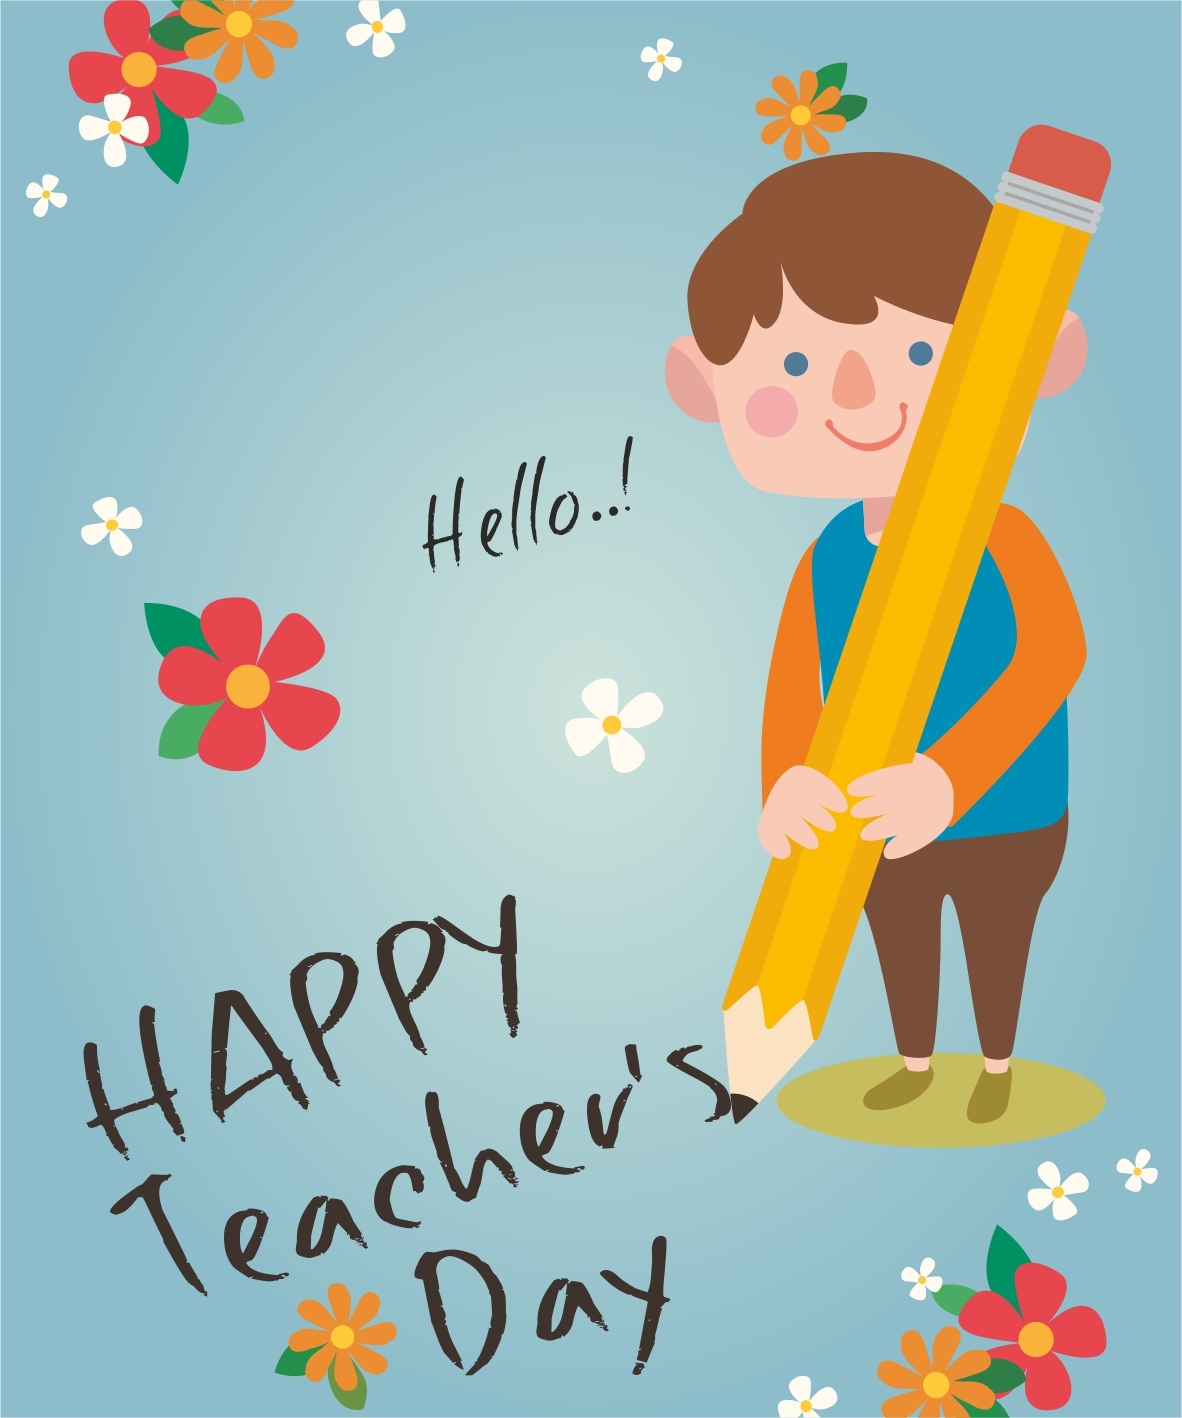 Happy Teachers Day - hello teacher